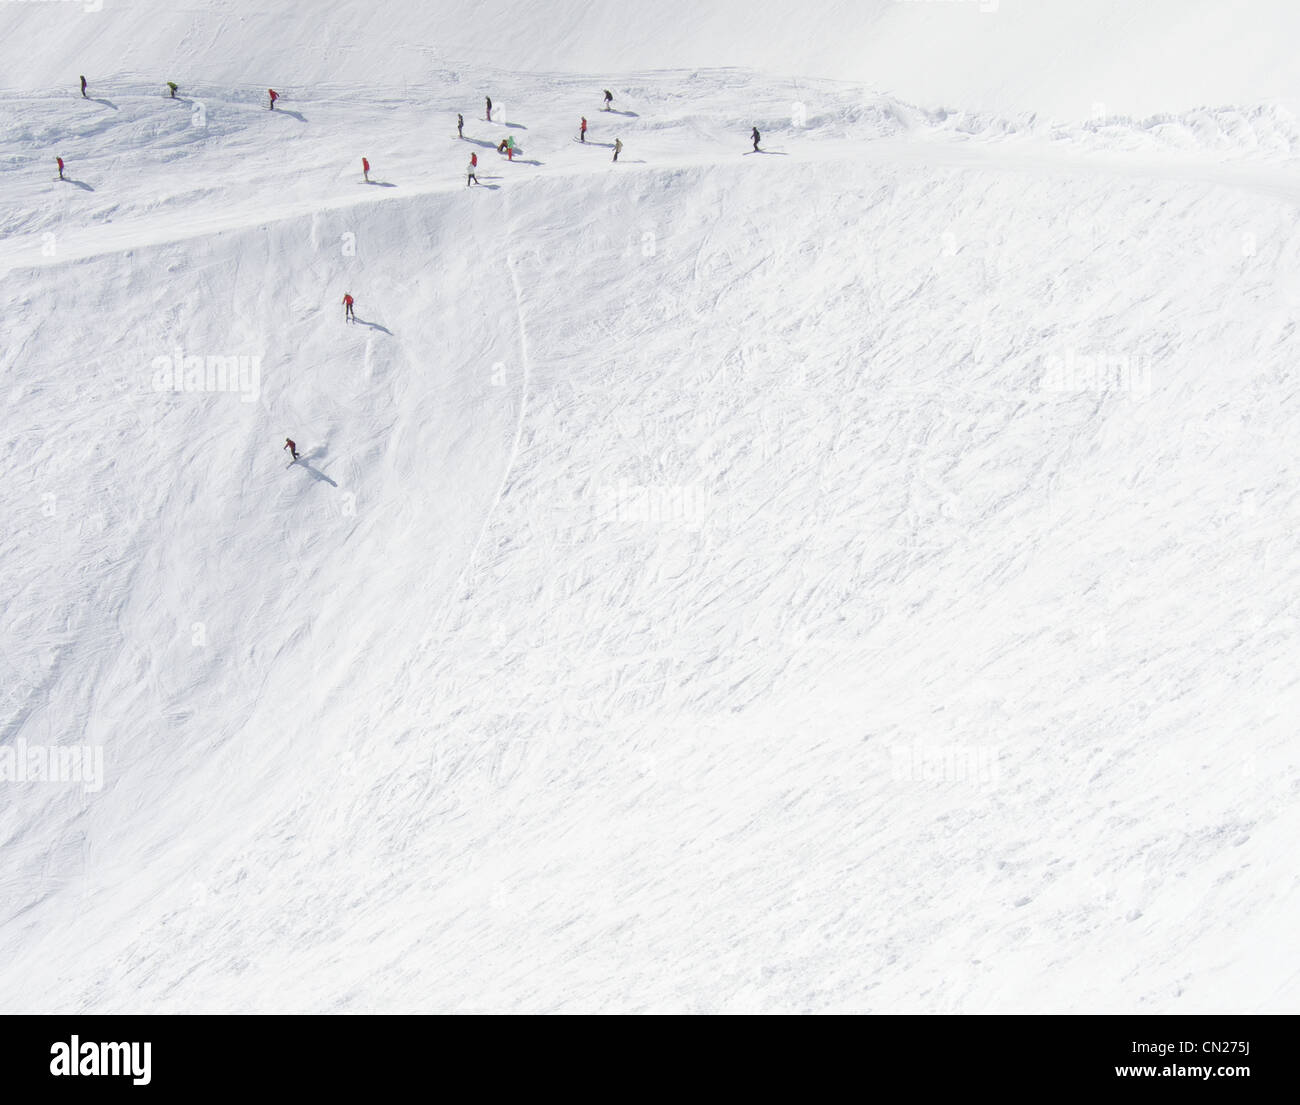 Skiers going down steep mountain side, Utah, USA Stock Photo